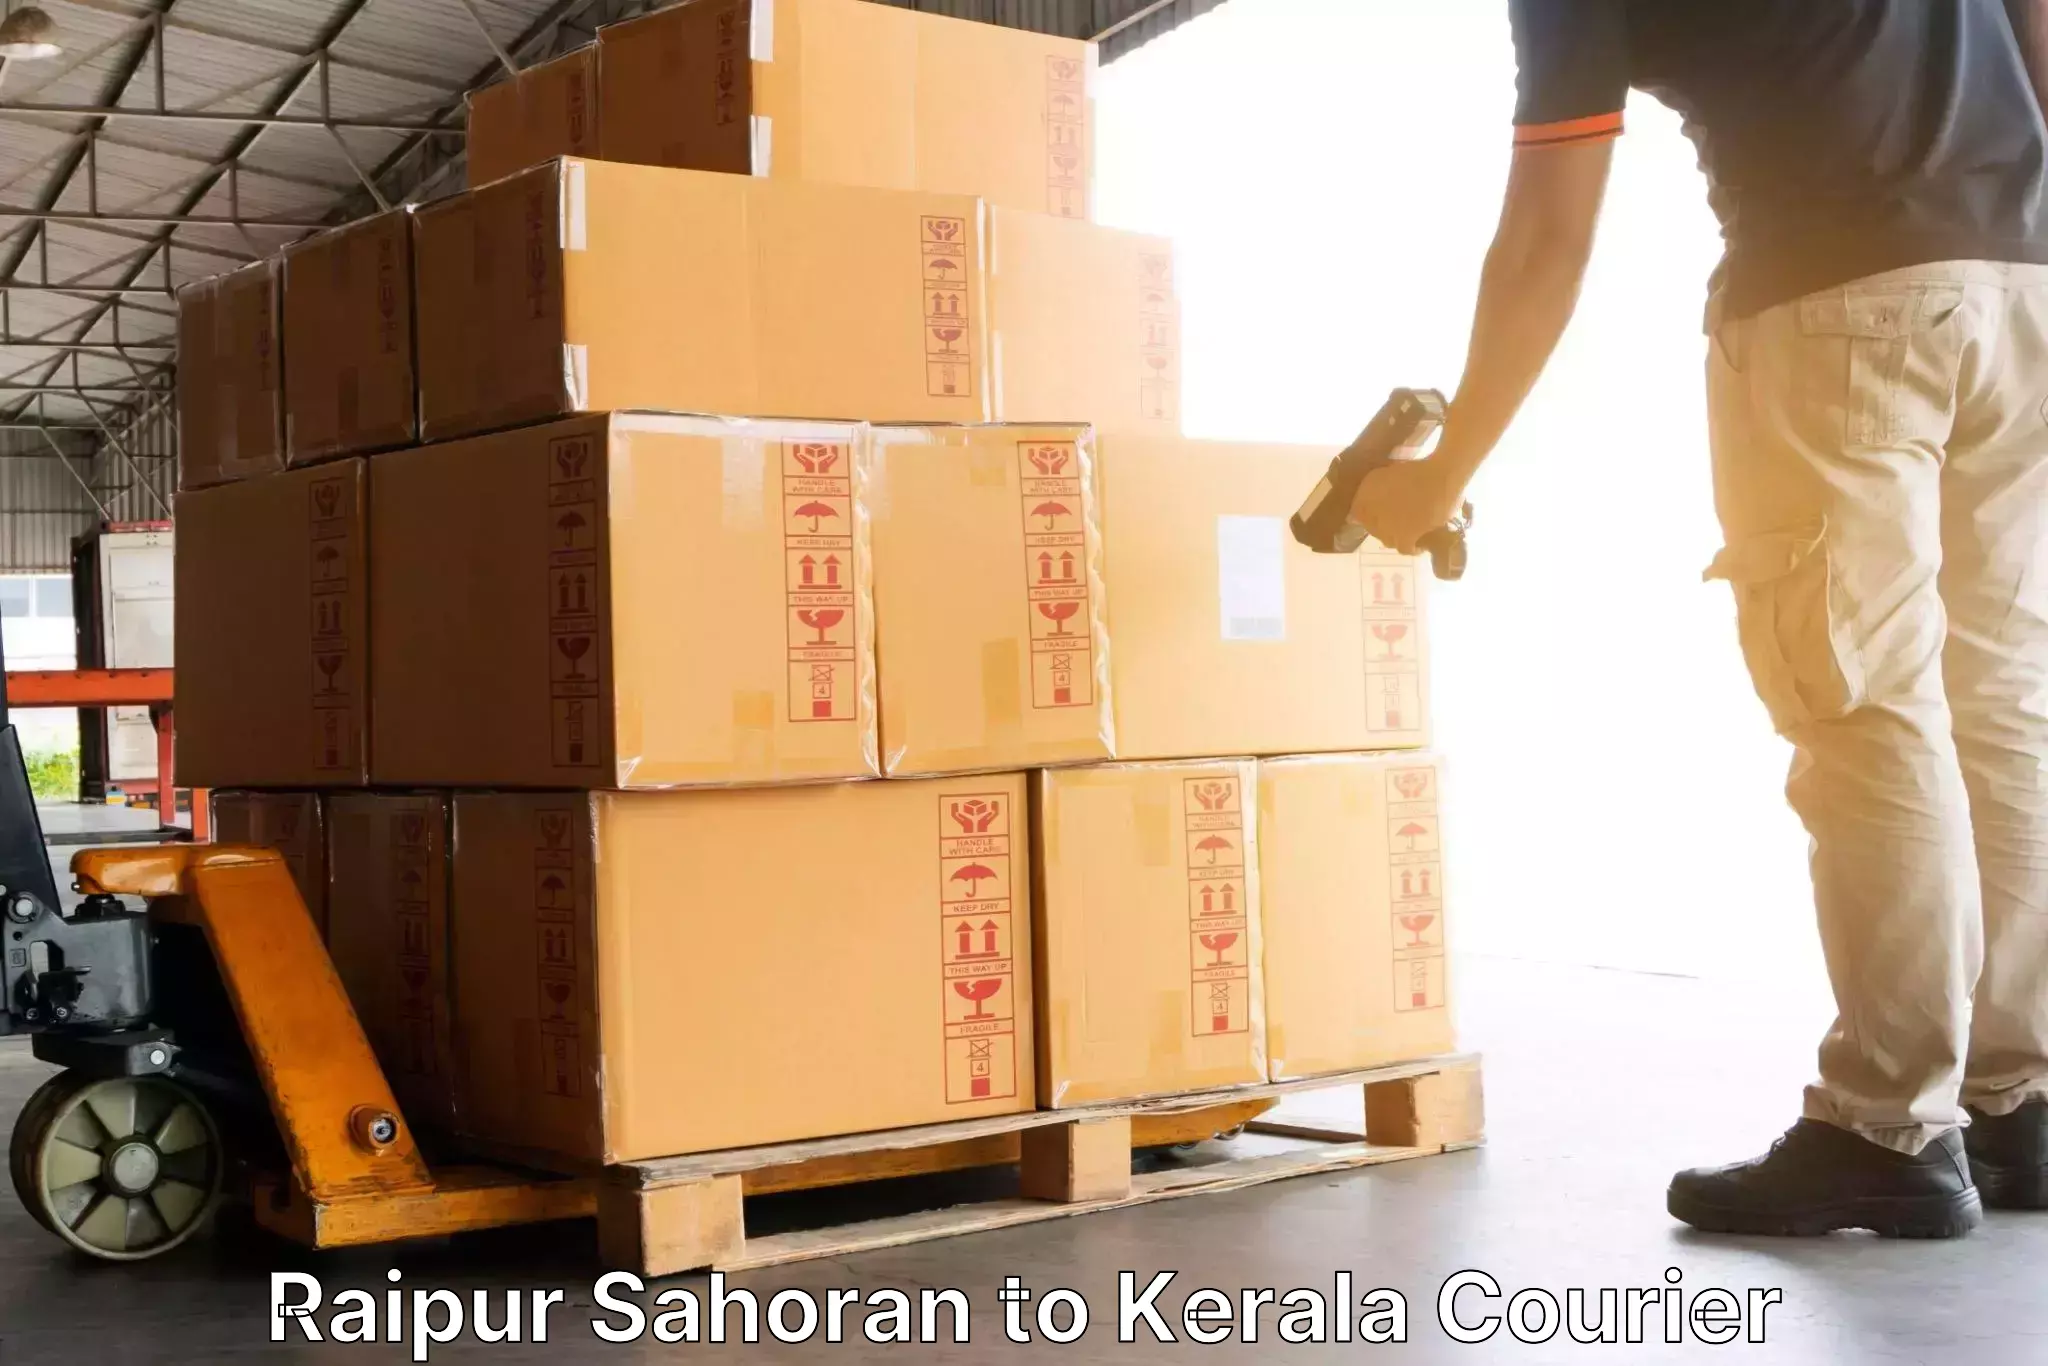 Speedy delivery service Raipur Sahoran to Puthukkad